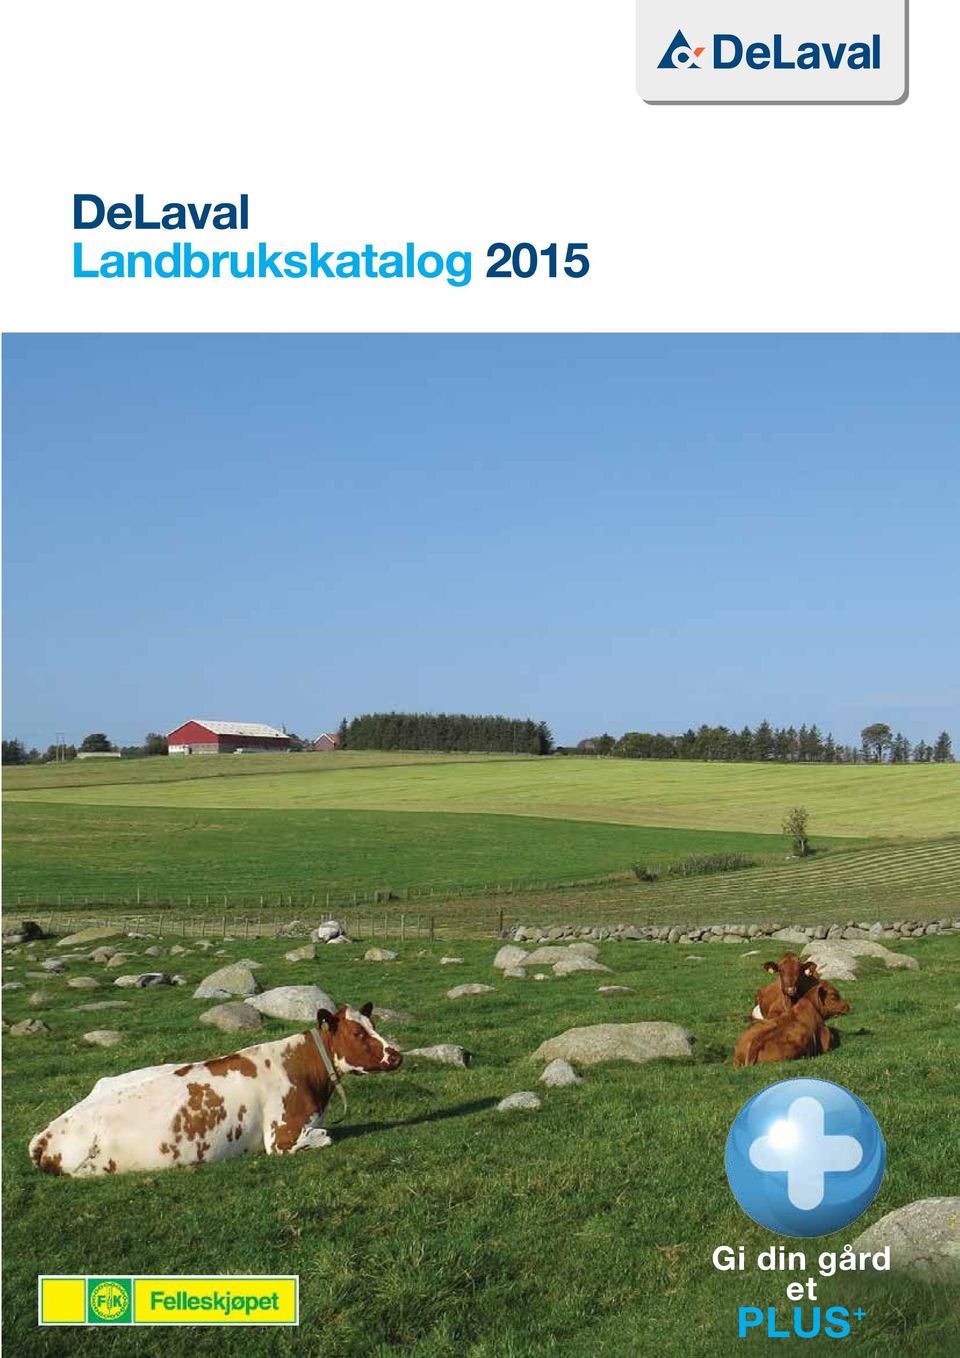 DeLaval Landbrukskatalog PDF Free Download